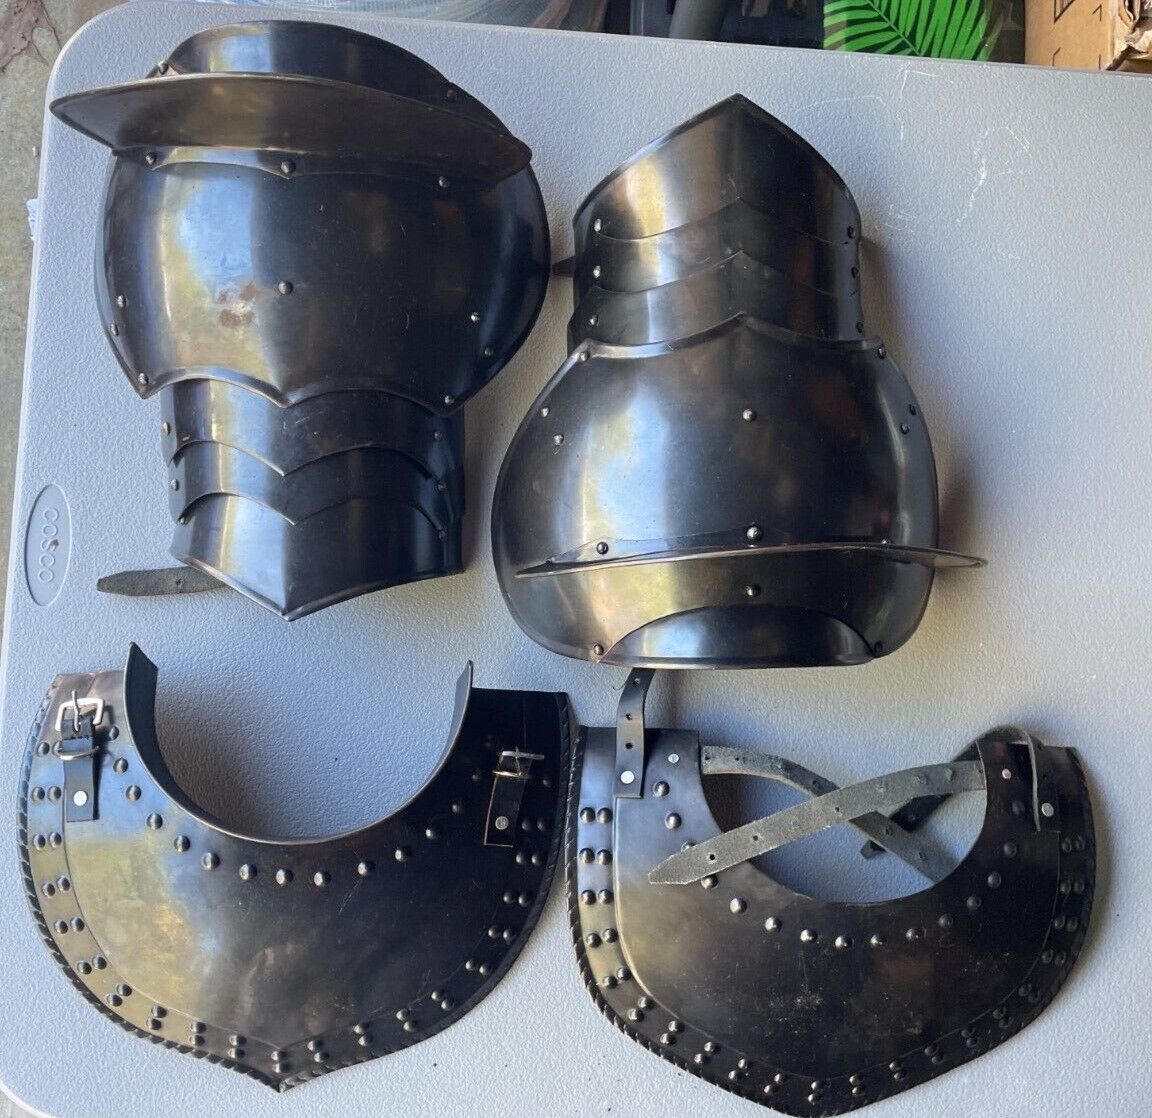 NauticalMart Dark Gothic Steel Gorget Neck Armor And Pauldron